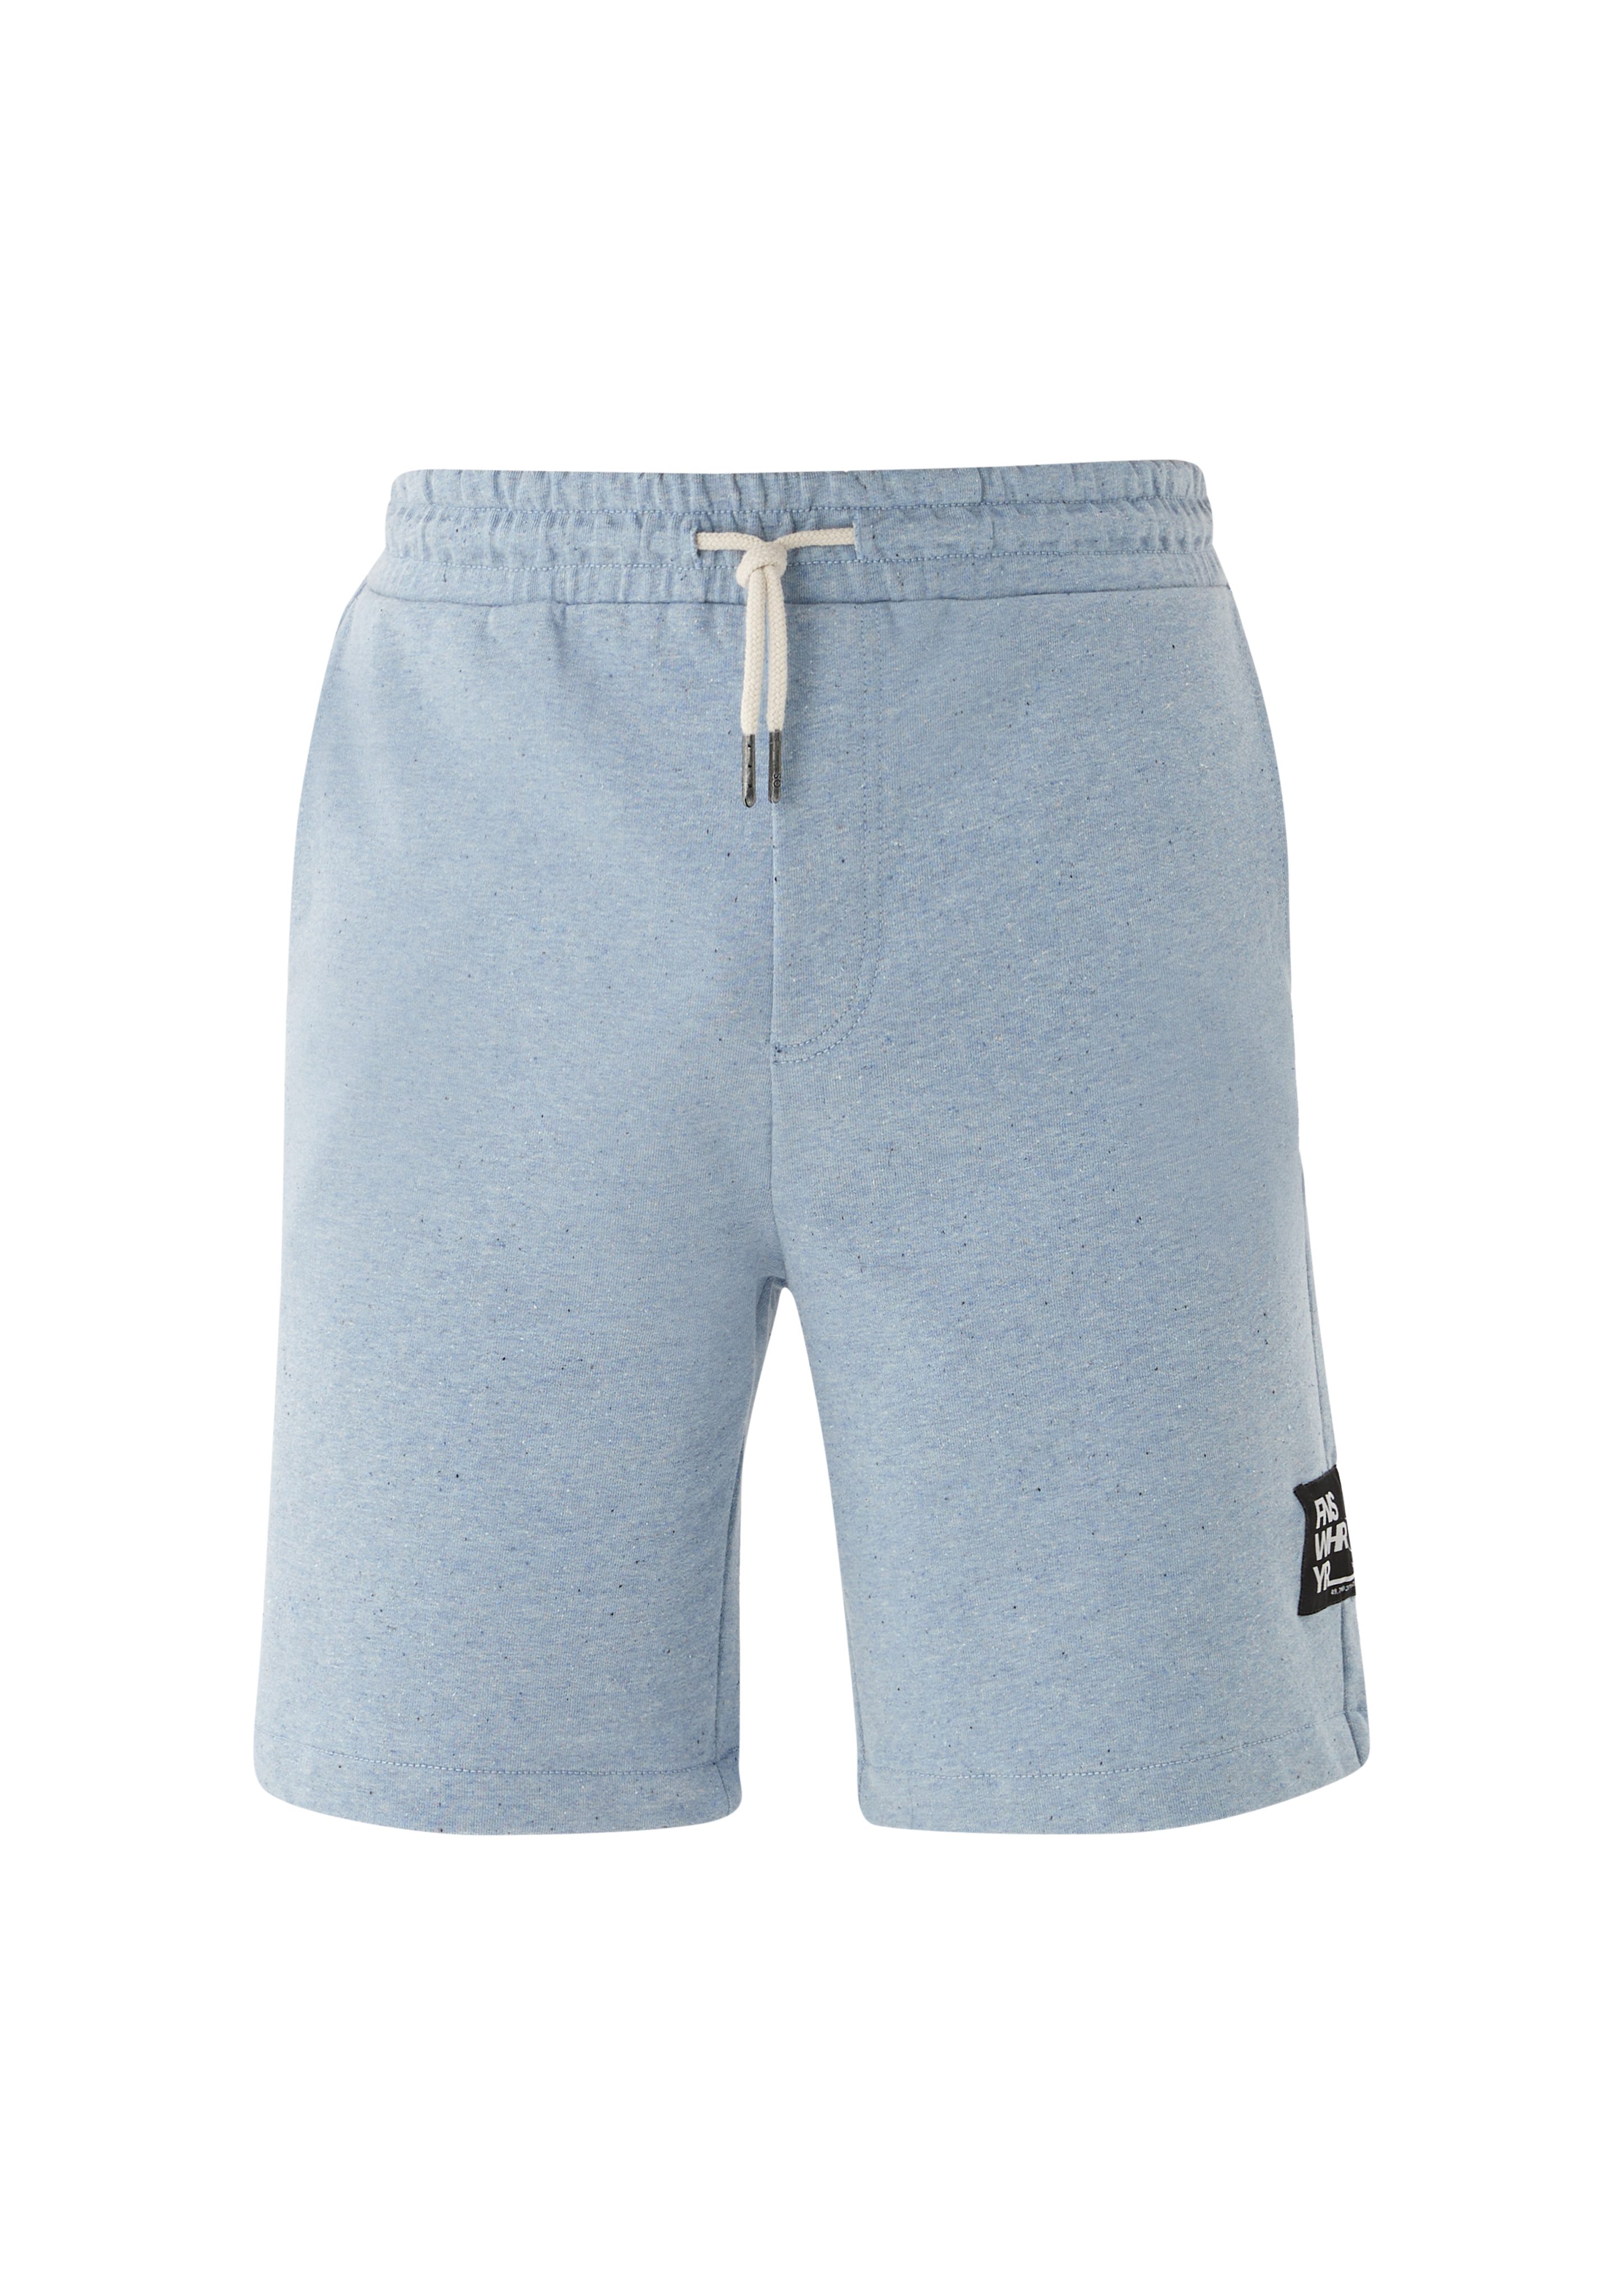 QS Relaxed: arktisblau Melierte Shorts Hose Shorts & Label-Patch